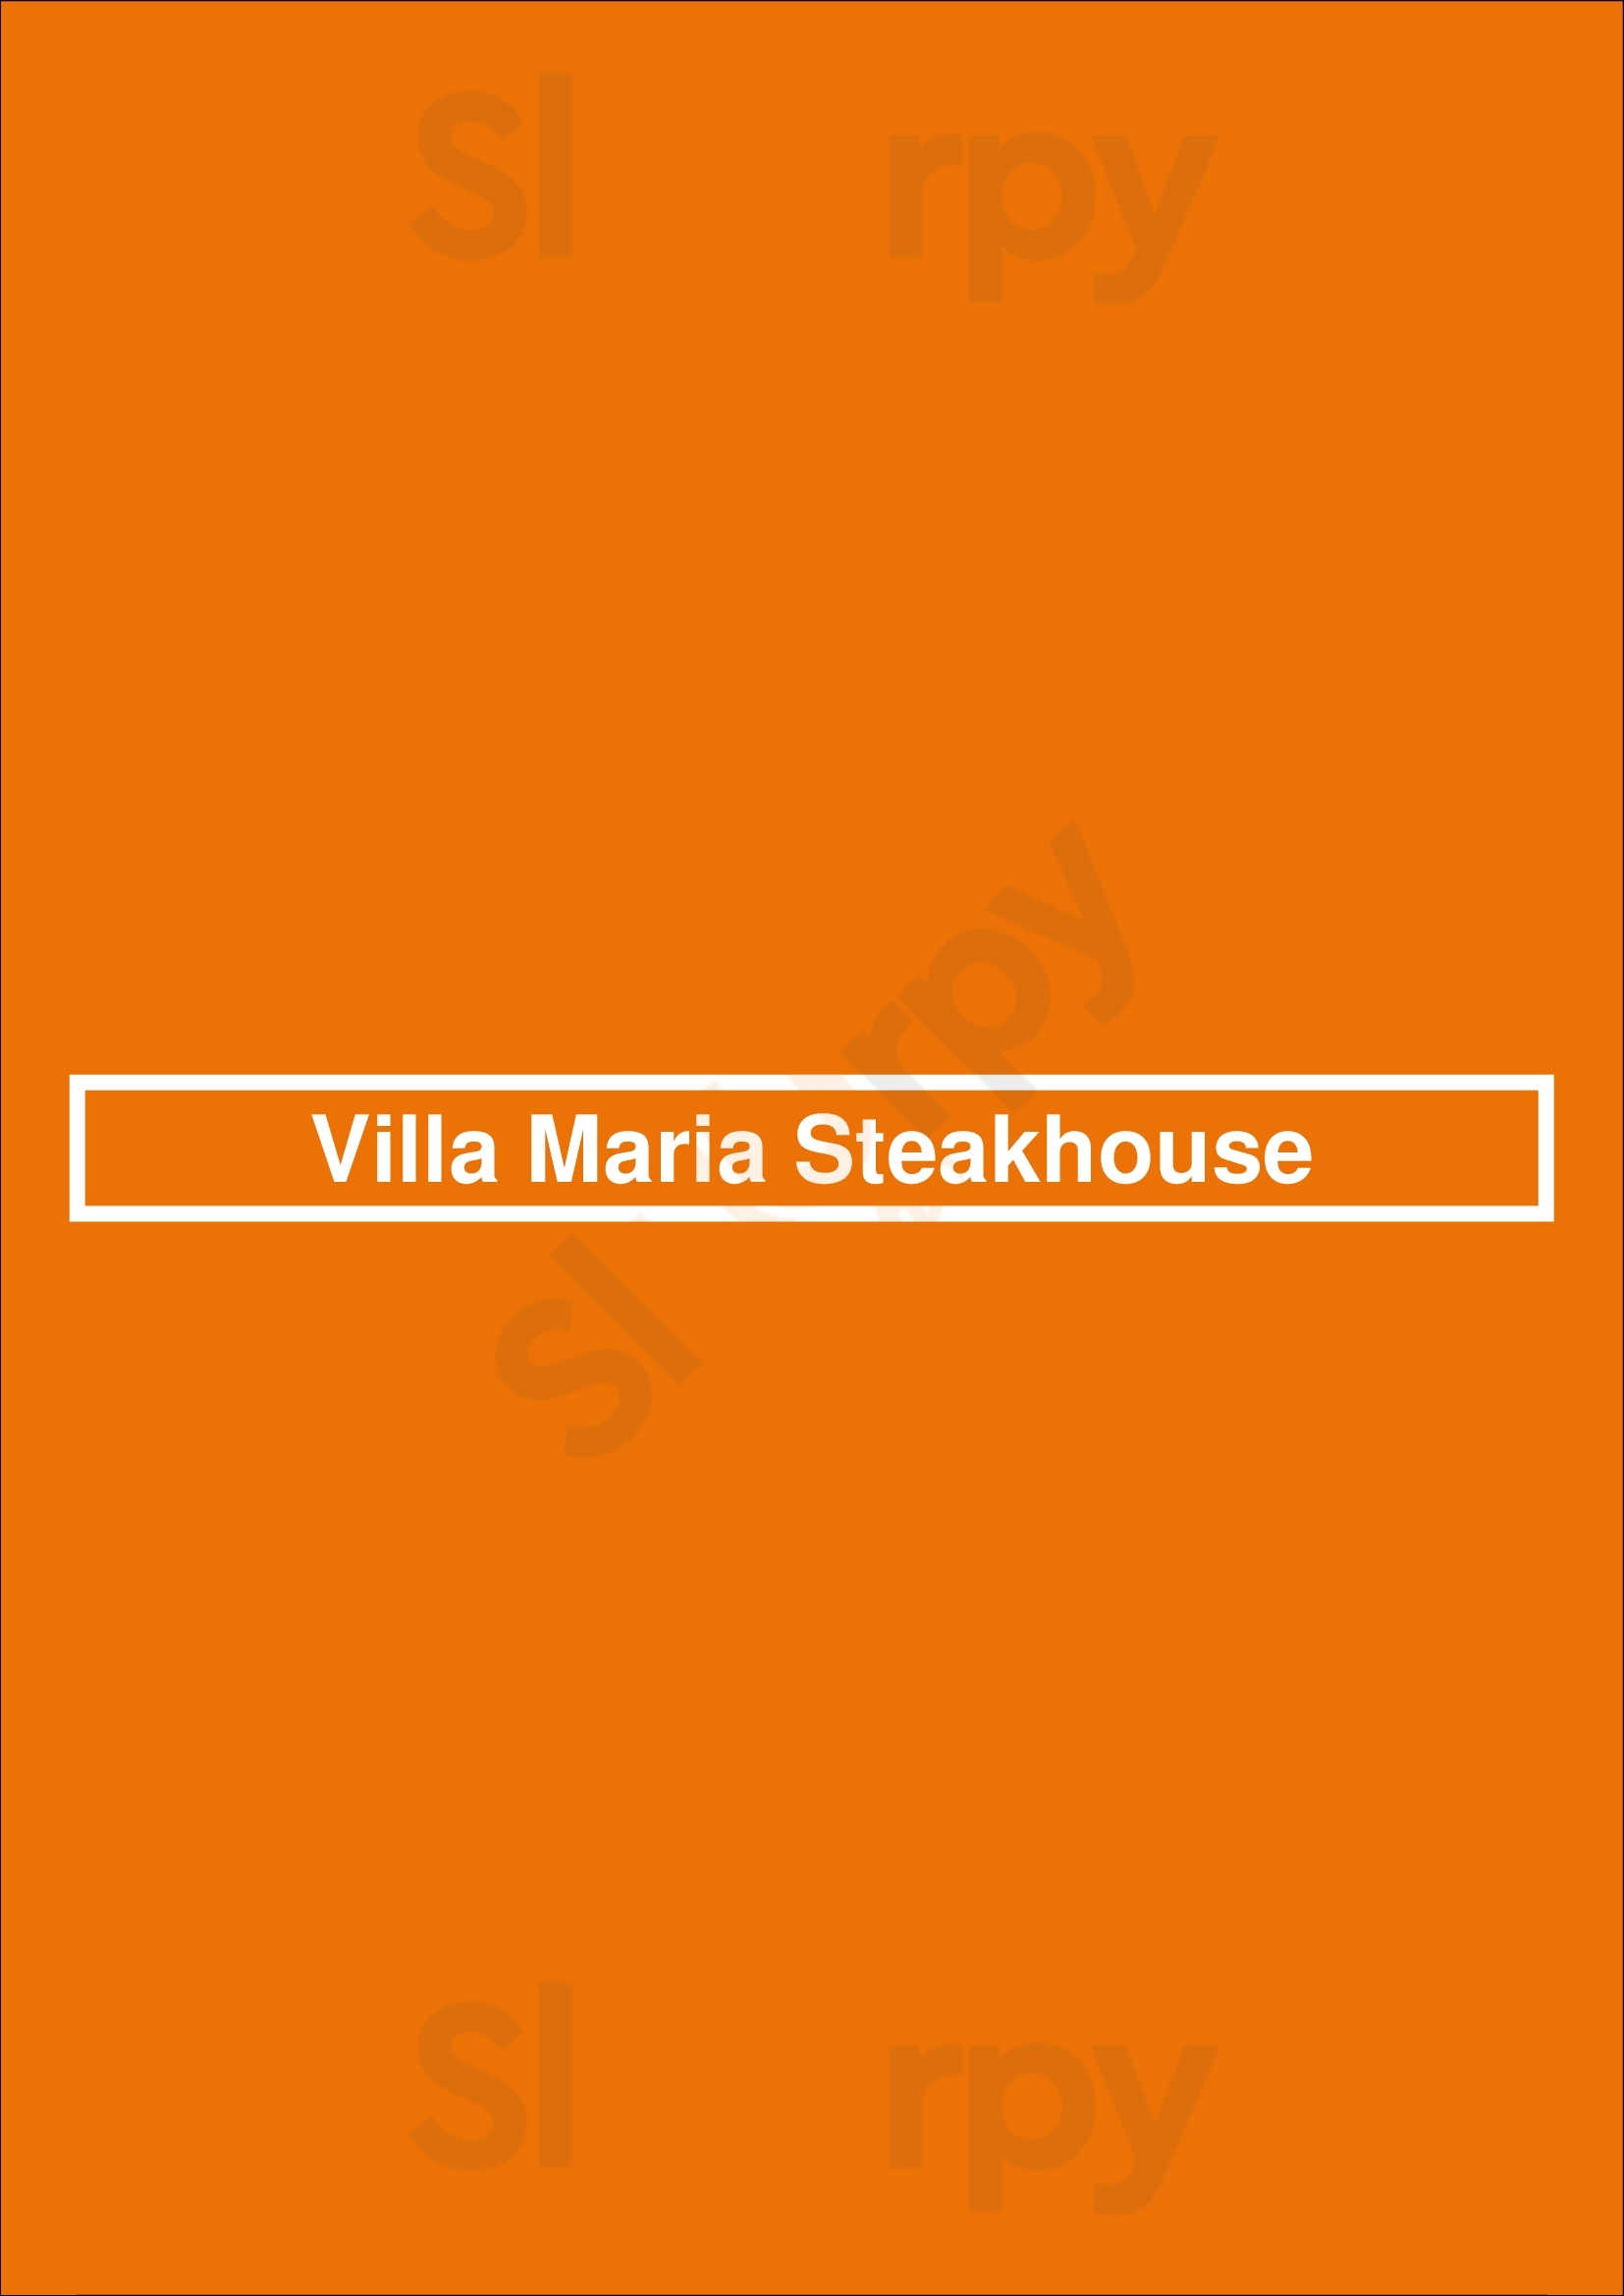 Villa Maria Steakhouse Amsterdam Menu - 1